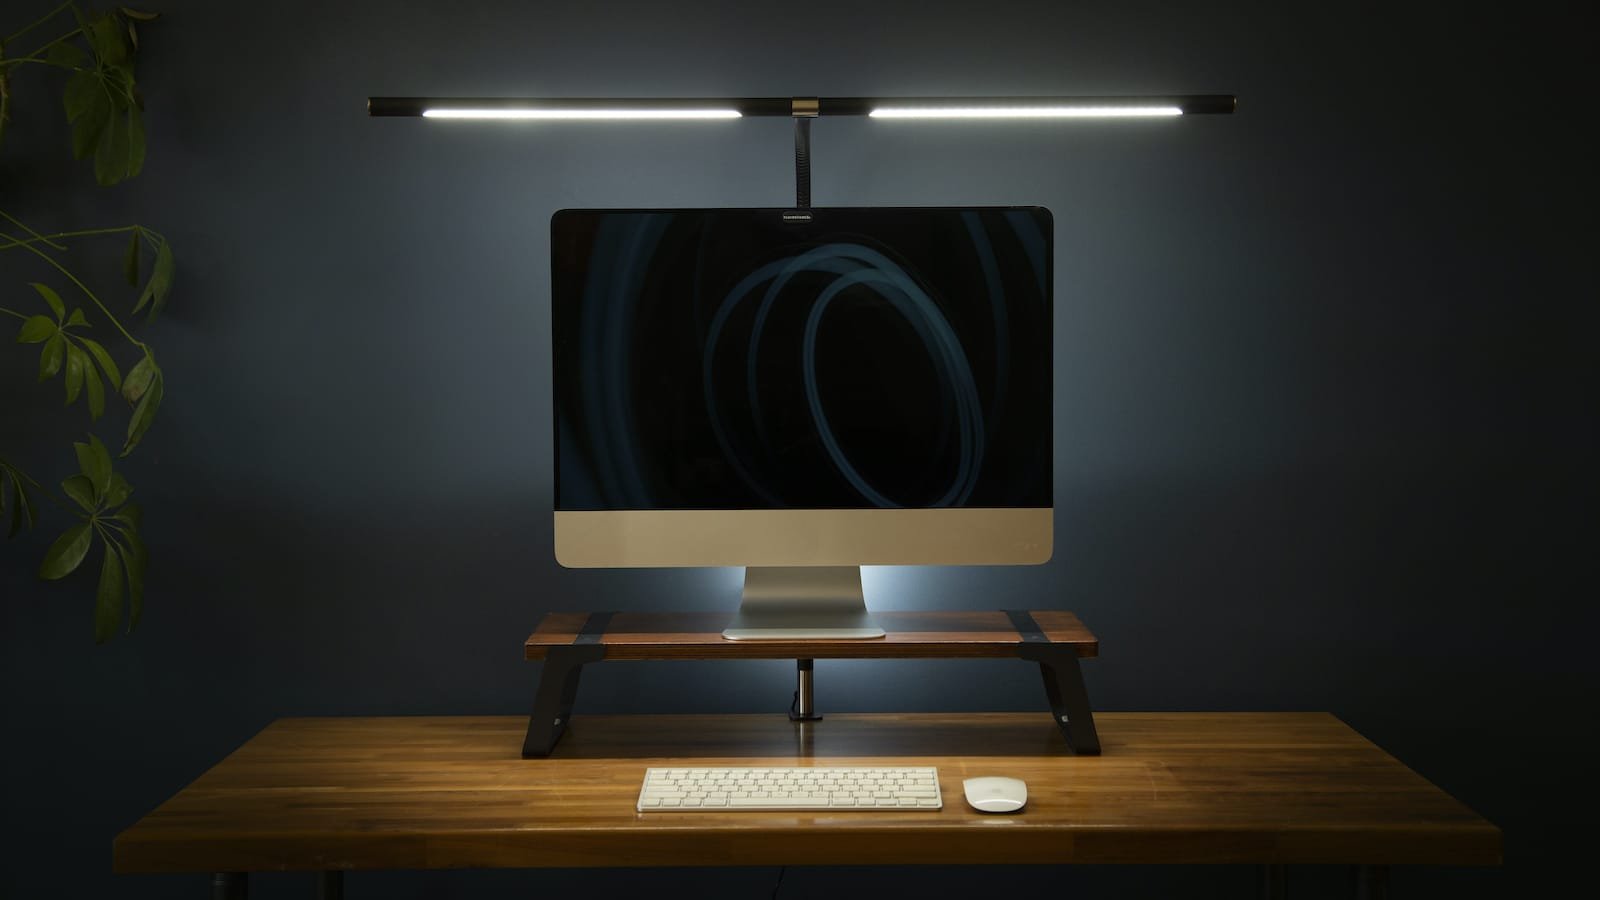 Illum Desk Light flexible customizable desk lighting has 3 independent light sources